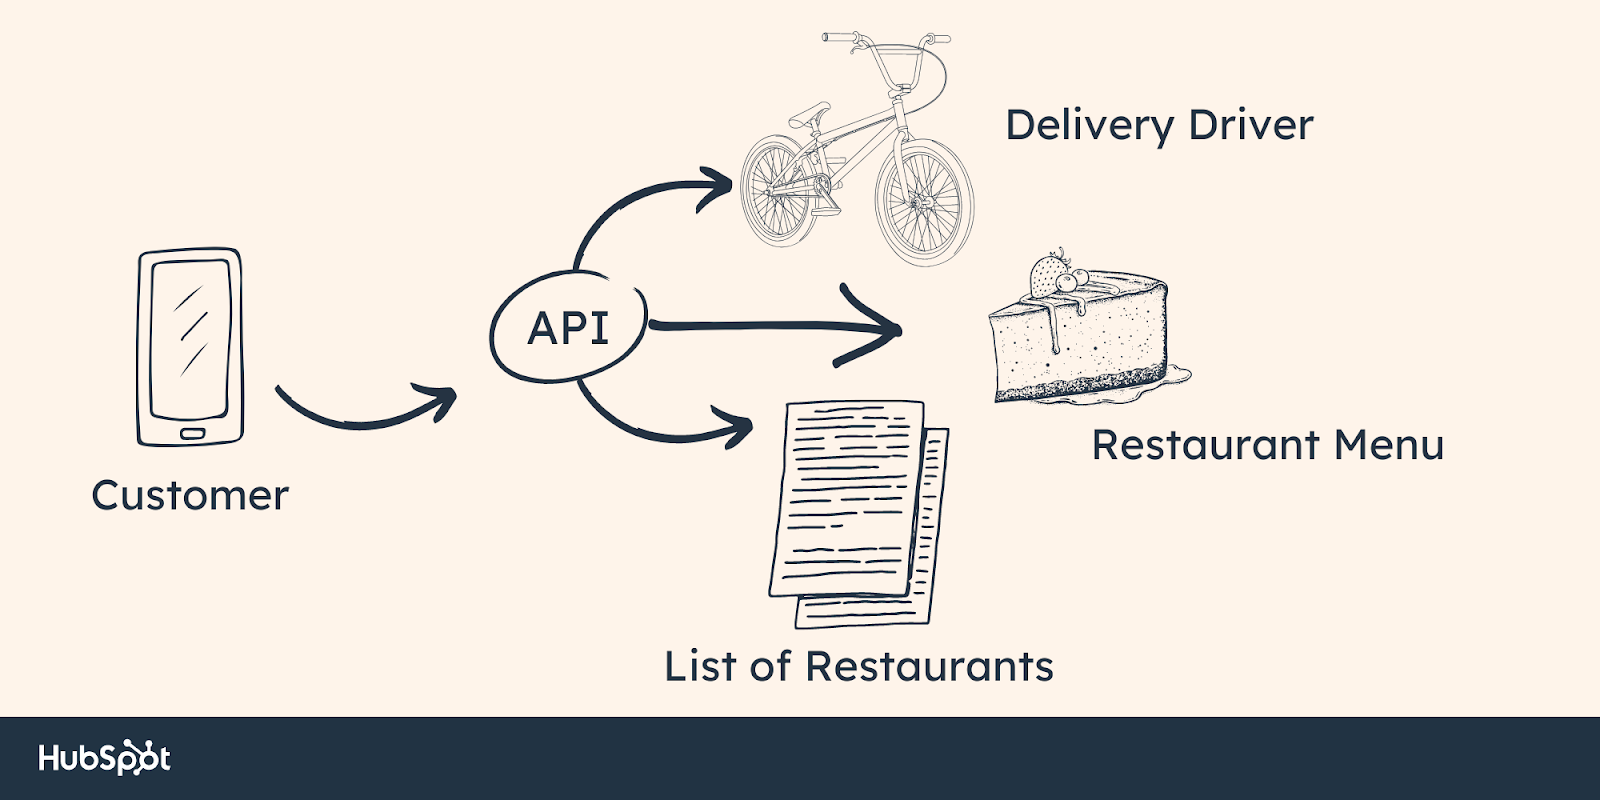 EDI vs. API: Example of how the API system works